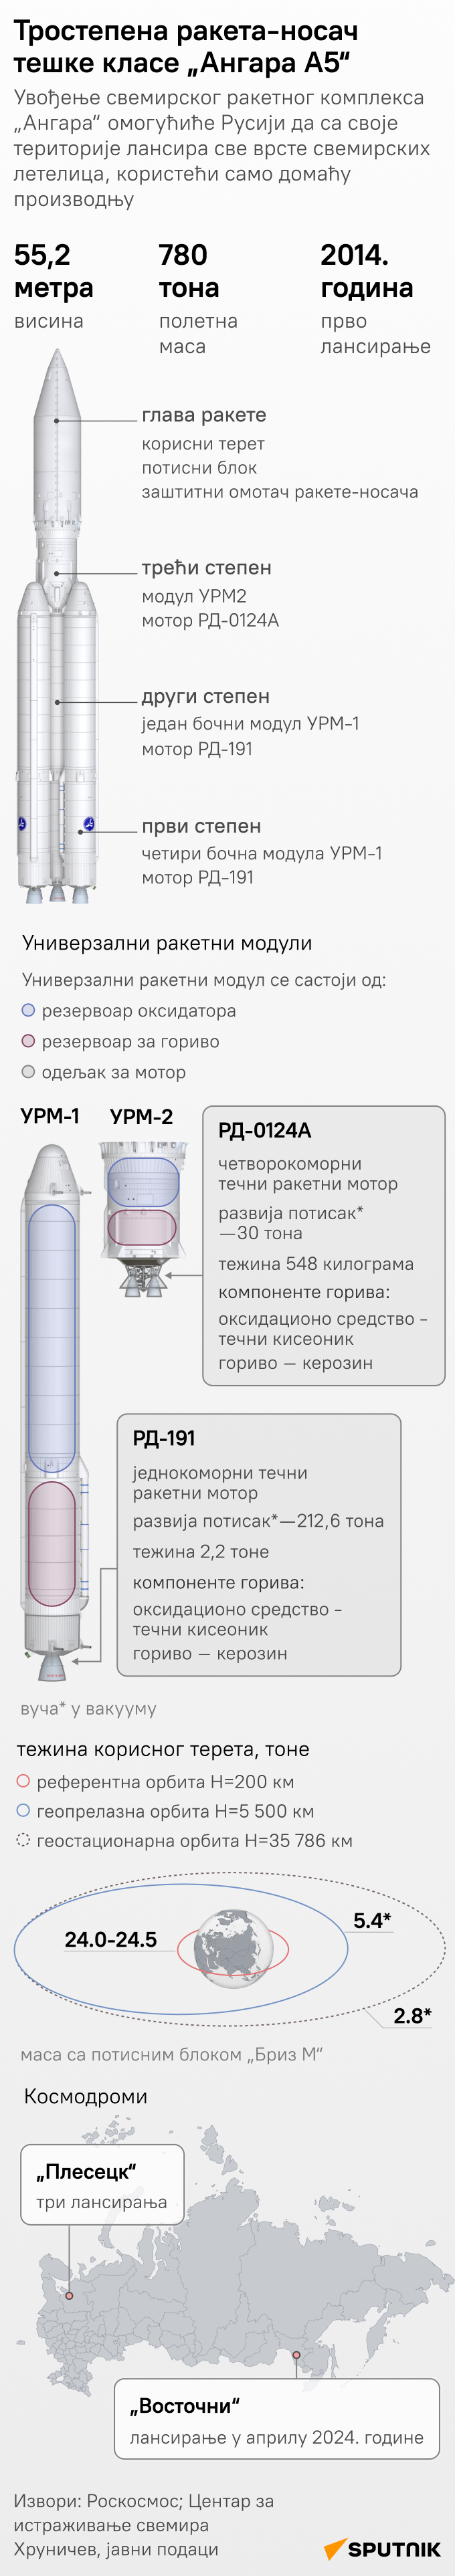 инфографика ракета Ангара ЋИР моб - Sputnik Србија